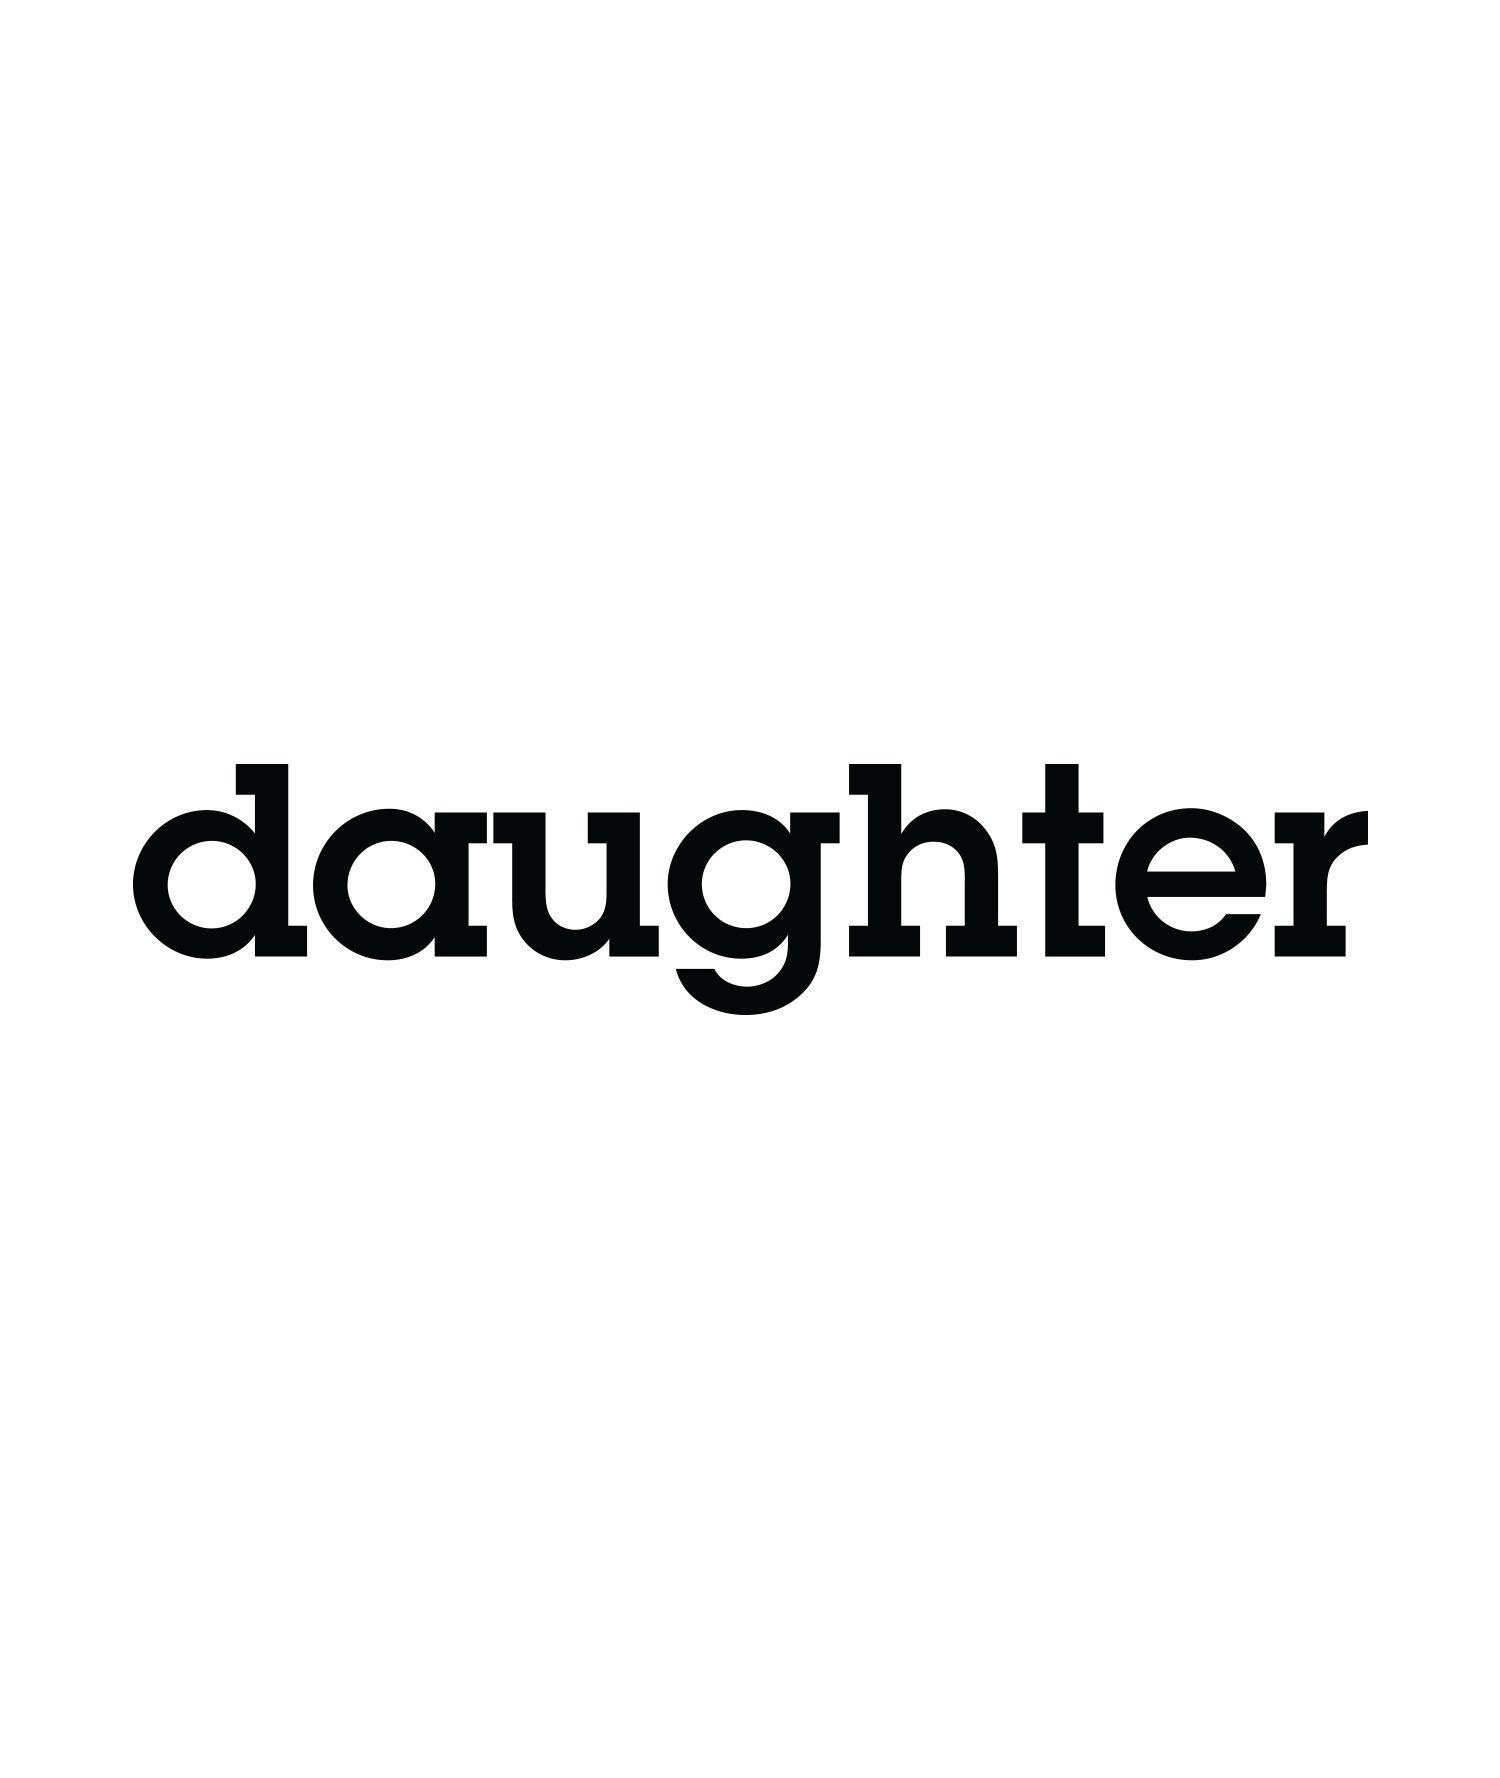 Daughter Logo - Daughter